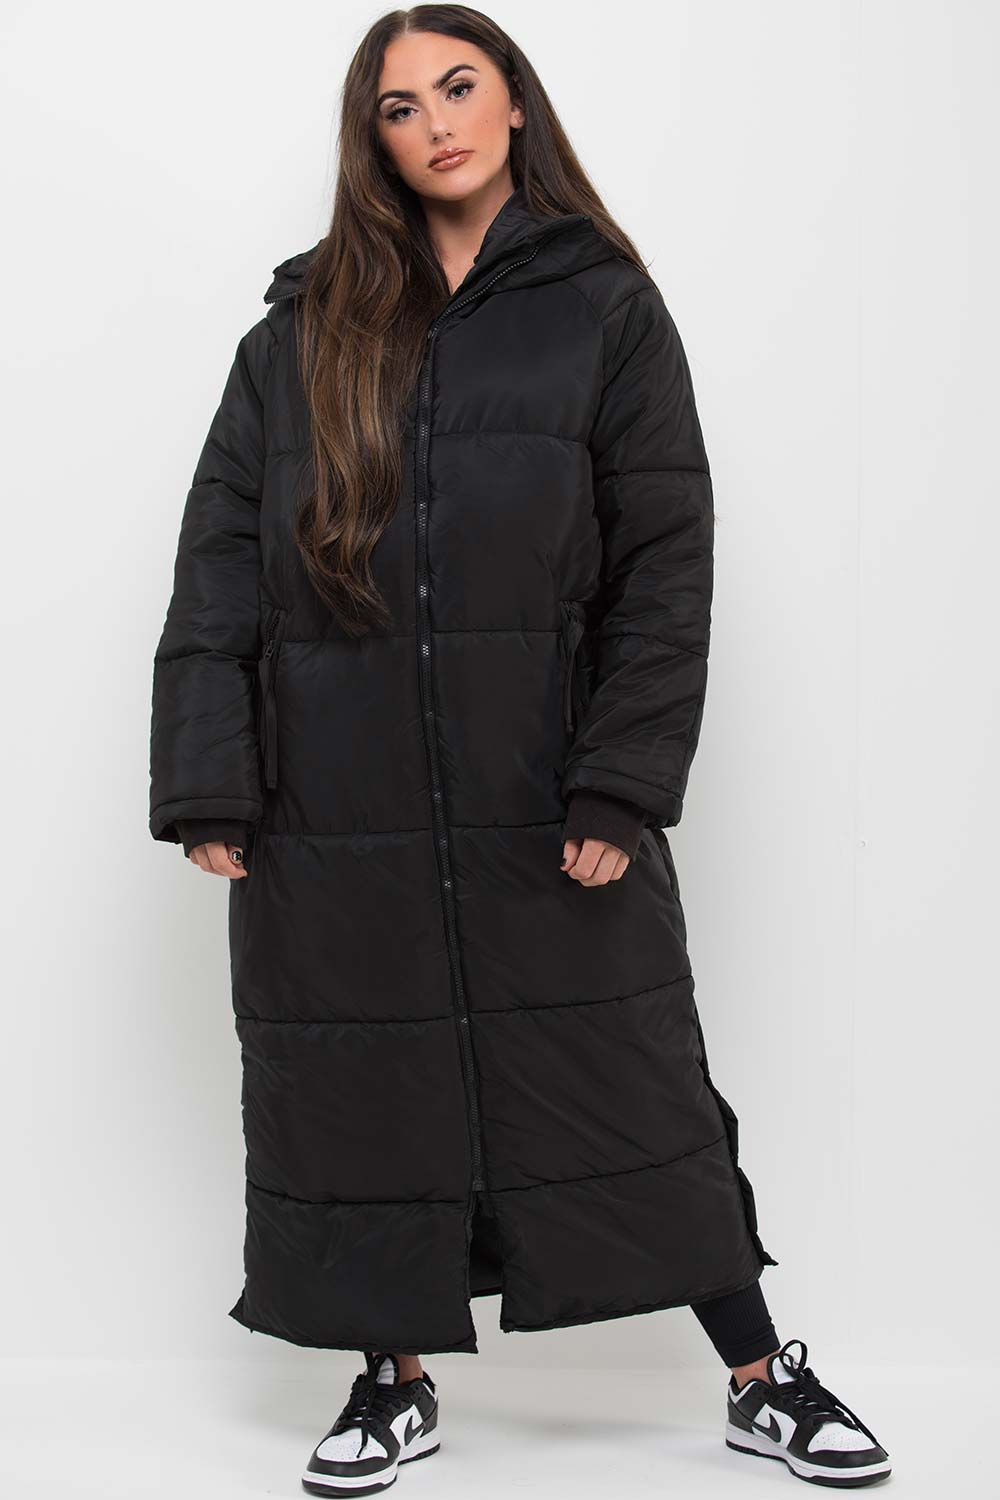 womens long coat with hood black